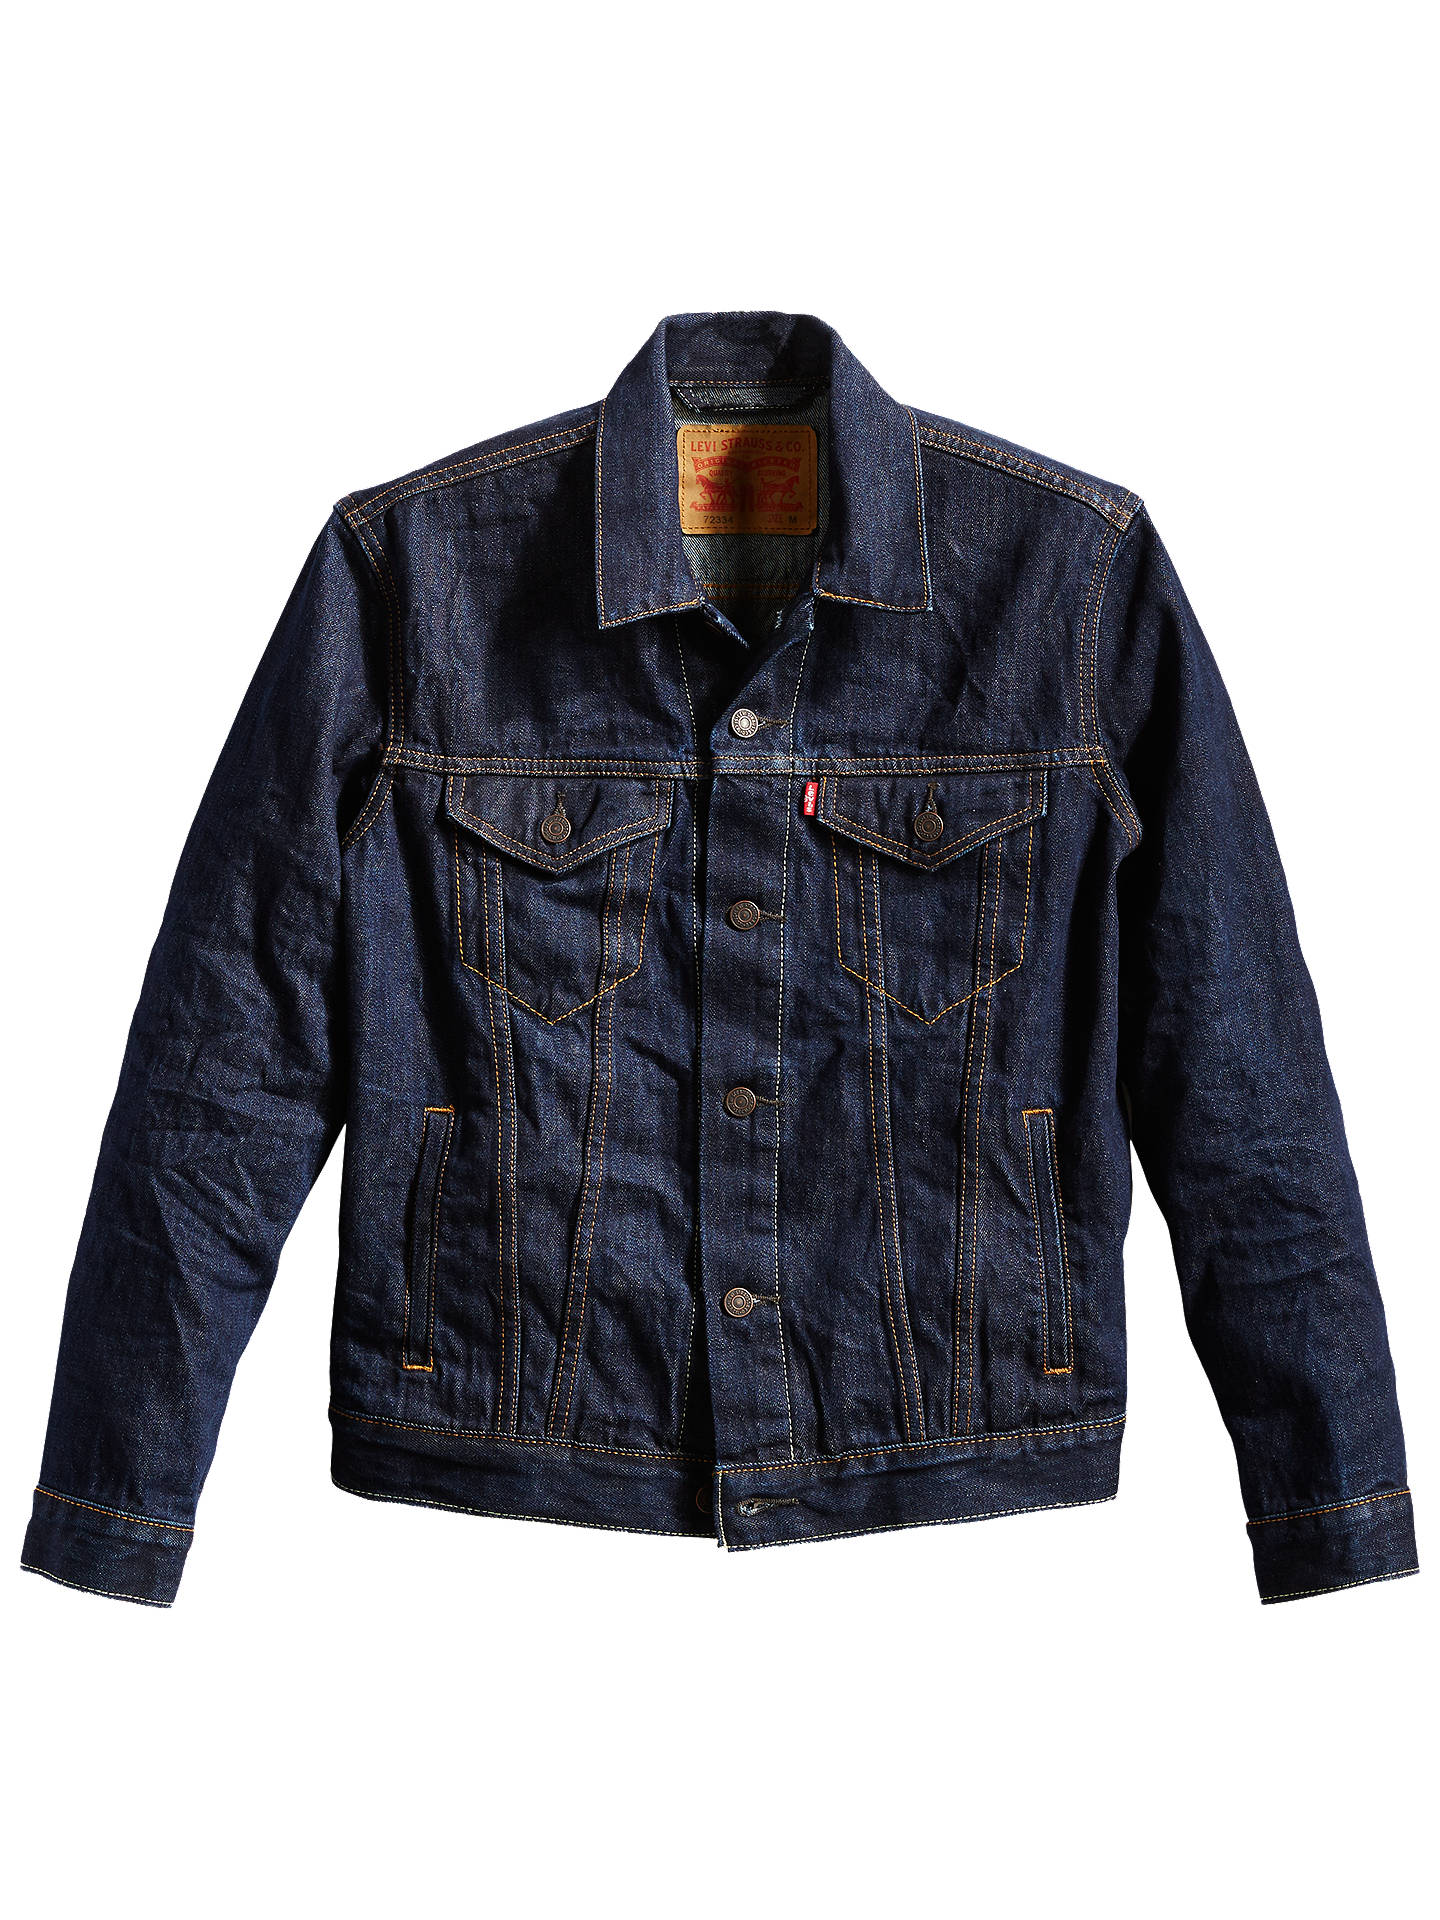 Levi's The Trucker Denim Jacket, Blue Rinse at John Lewis & Partners